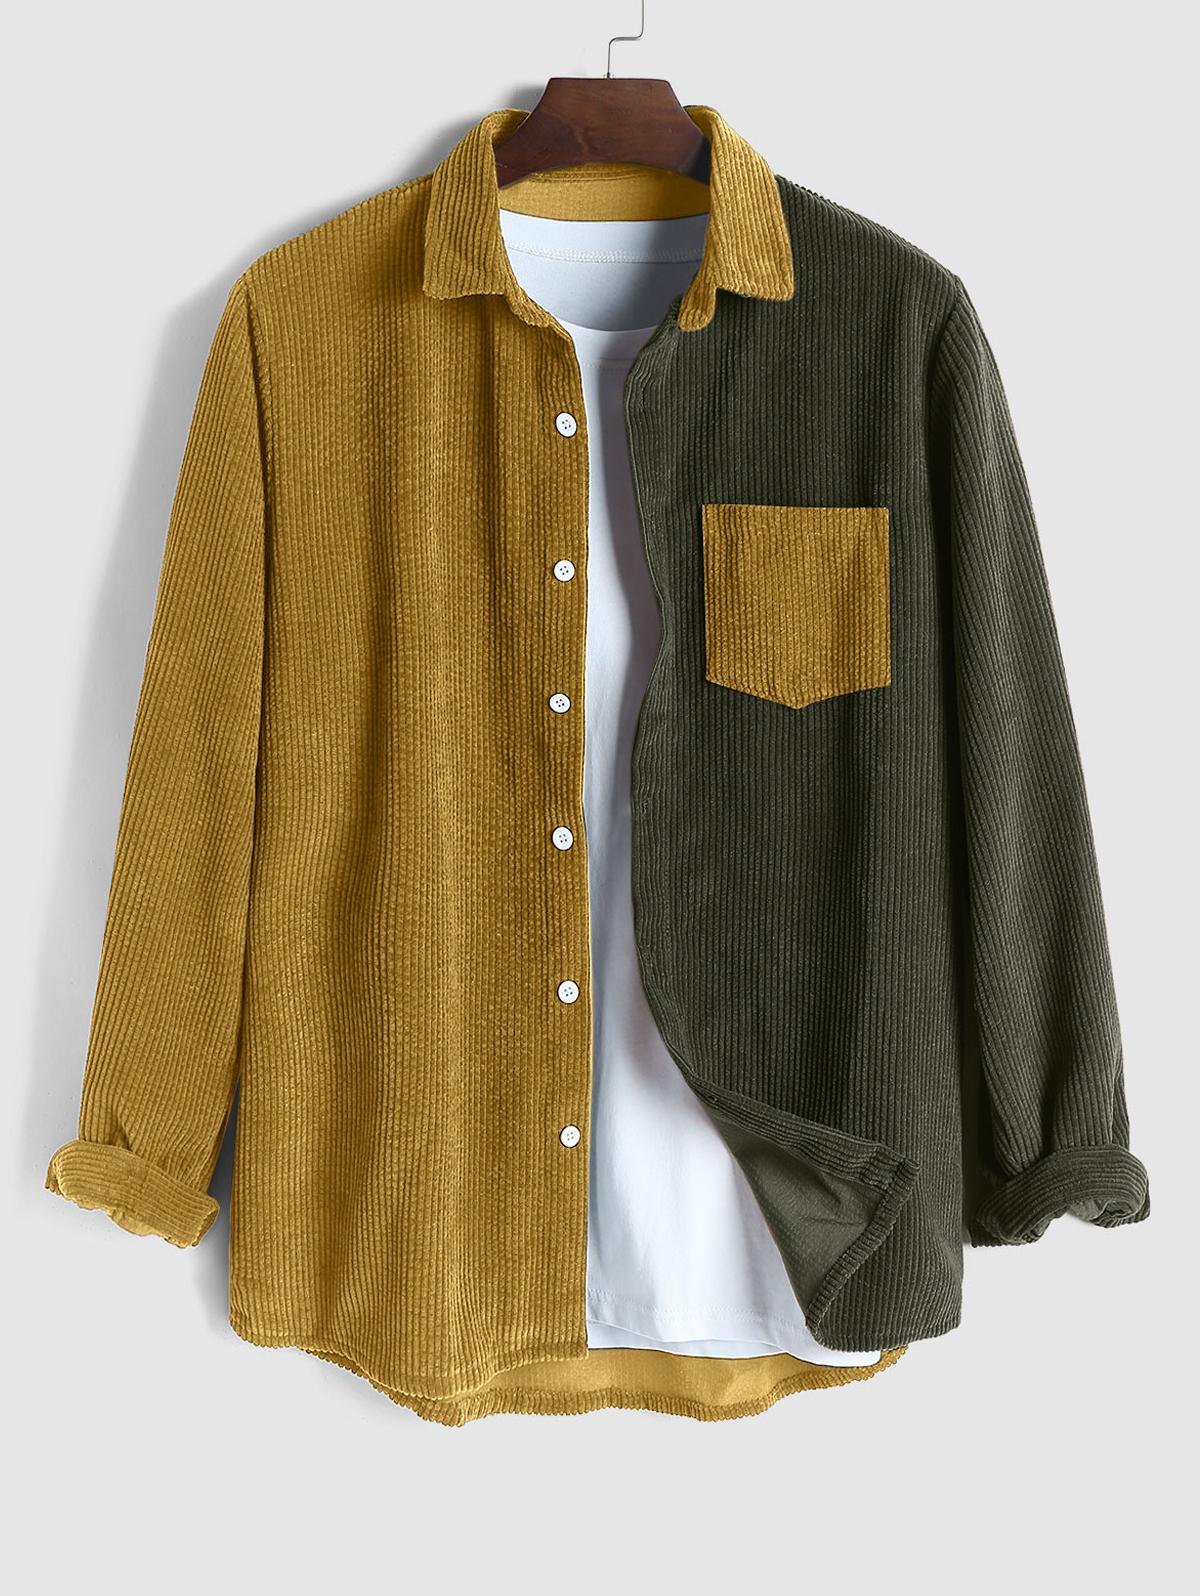 ZAFUL Men's Colorblock Pattern Corduroy Long Sleeves Shirt S Deep green